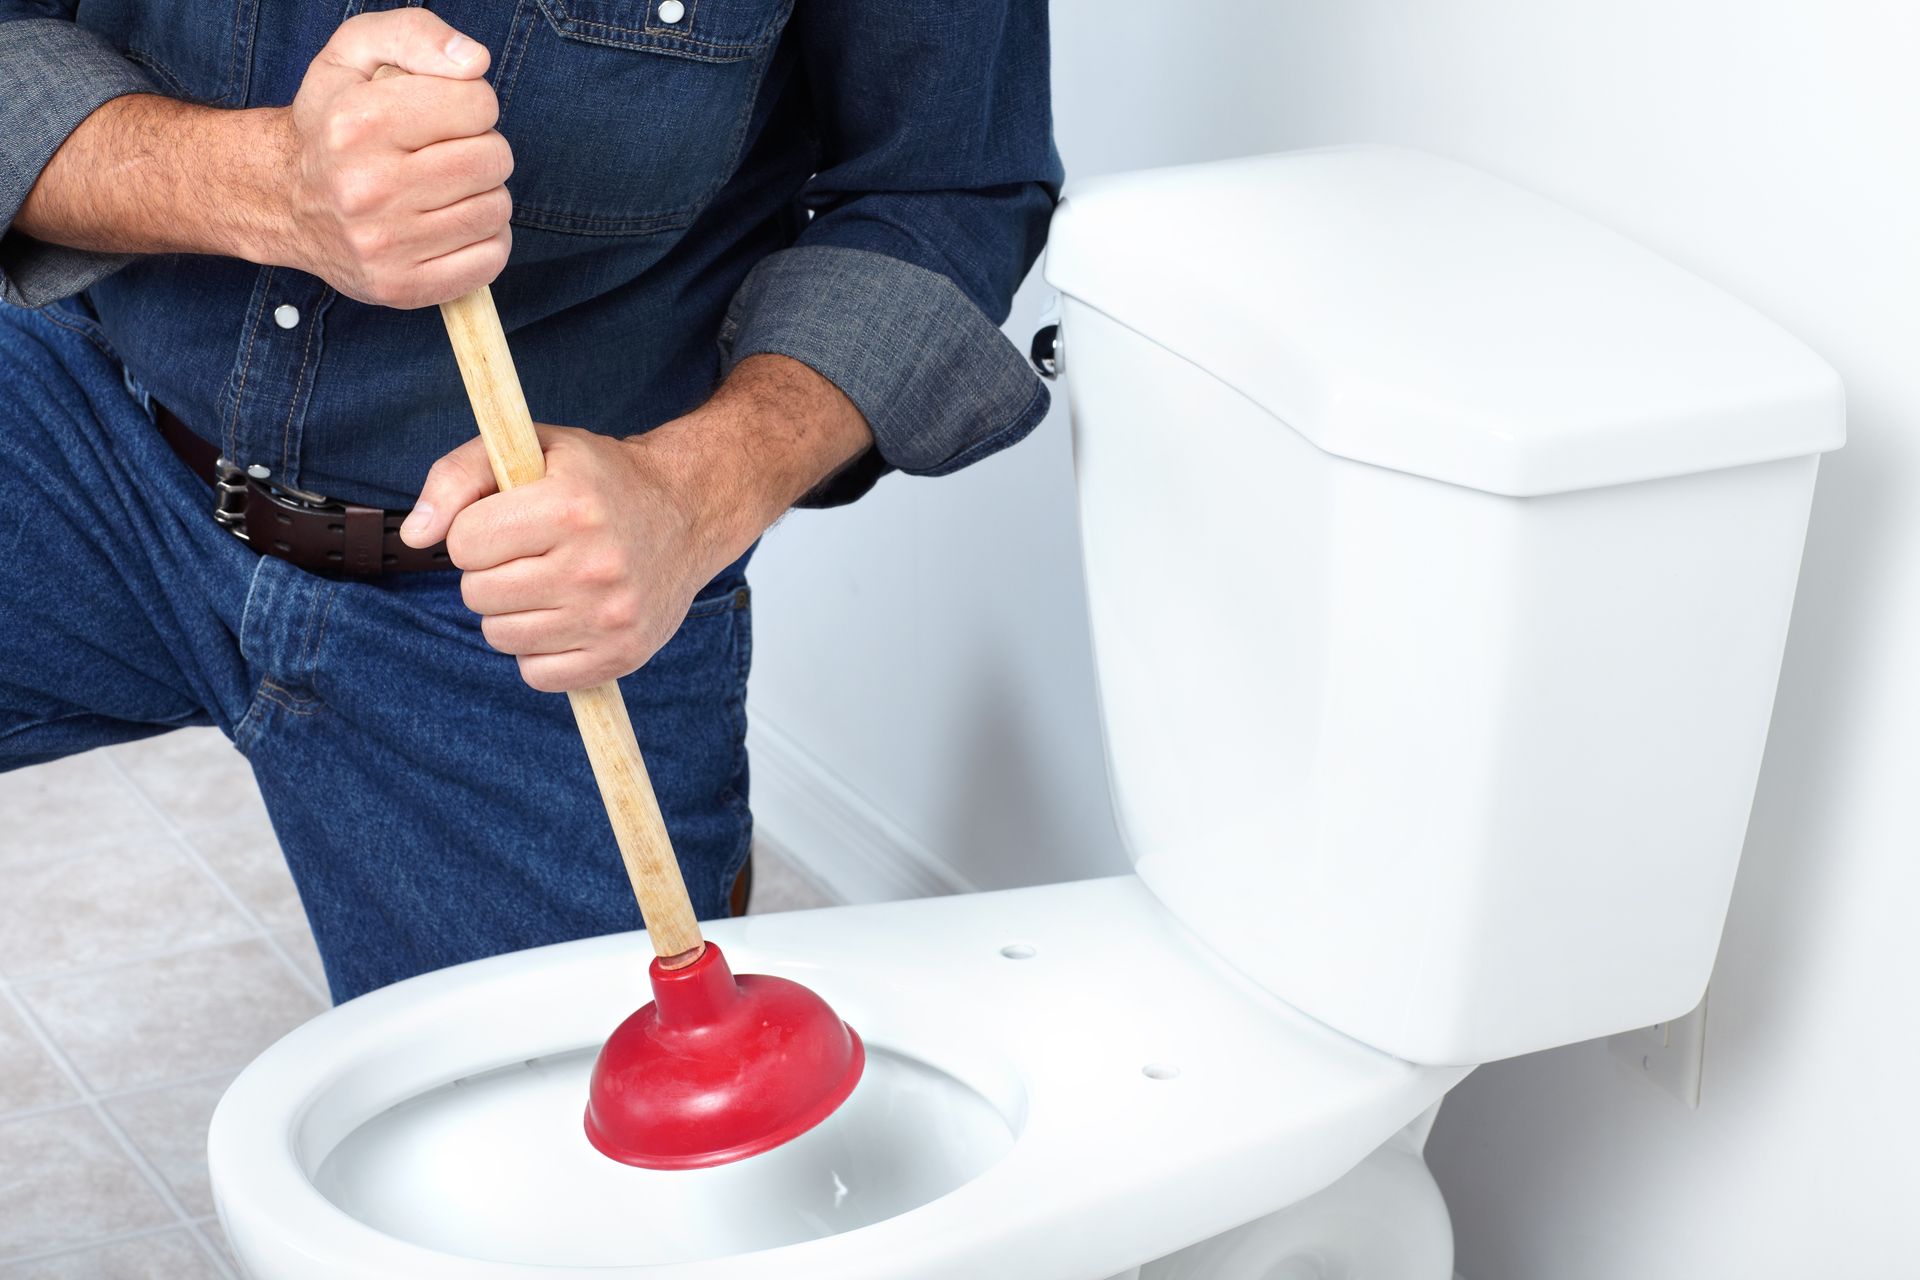 Preventative Measures for Toilet Leaks